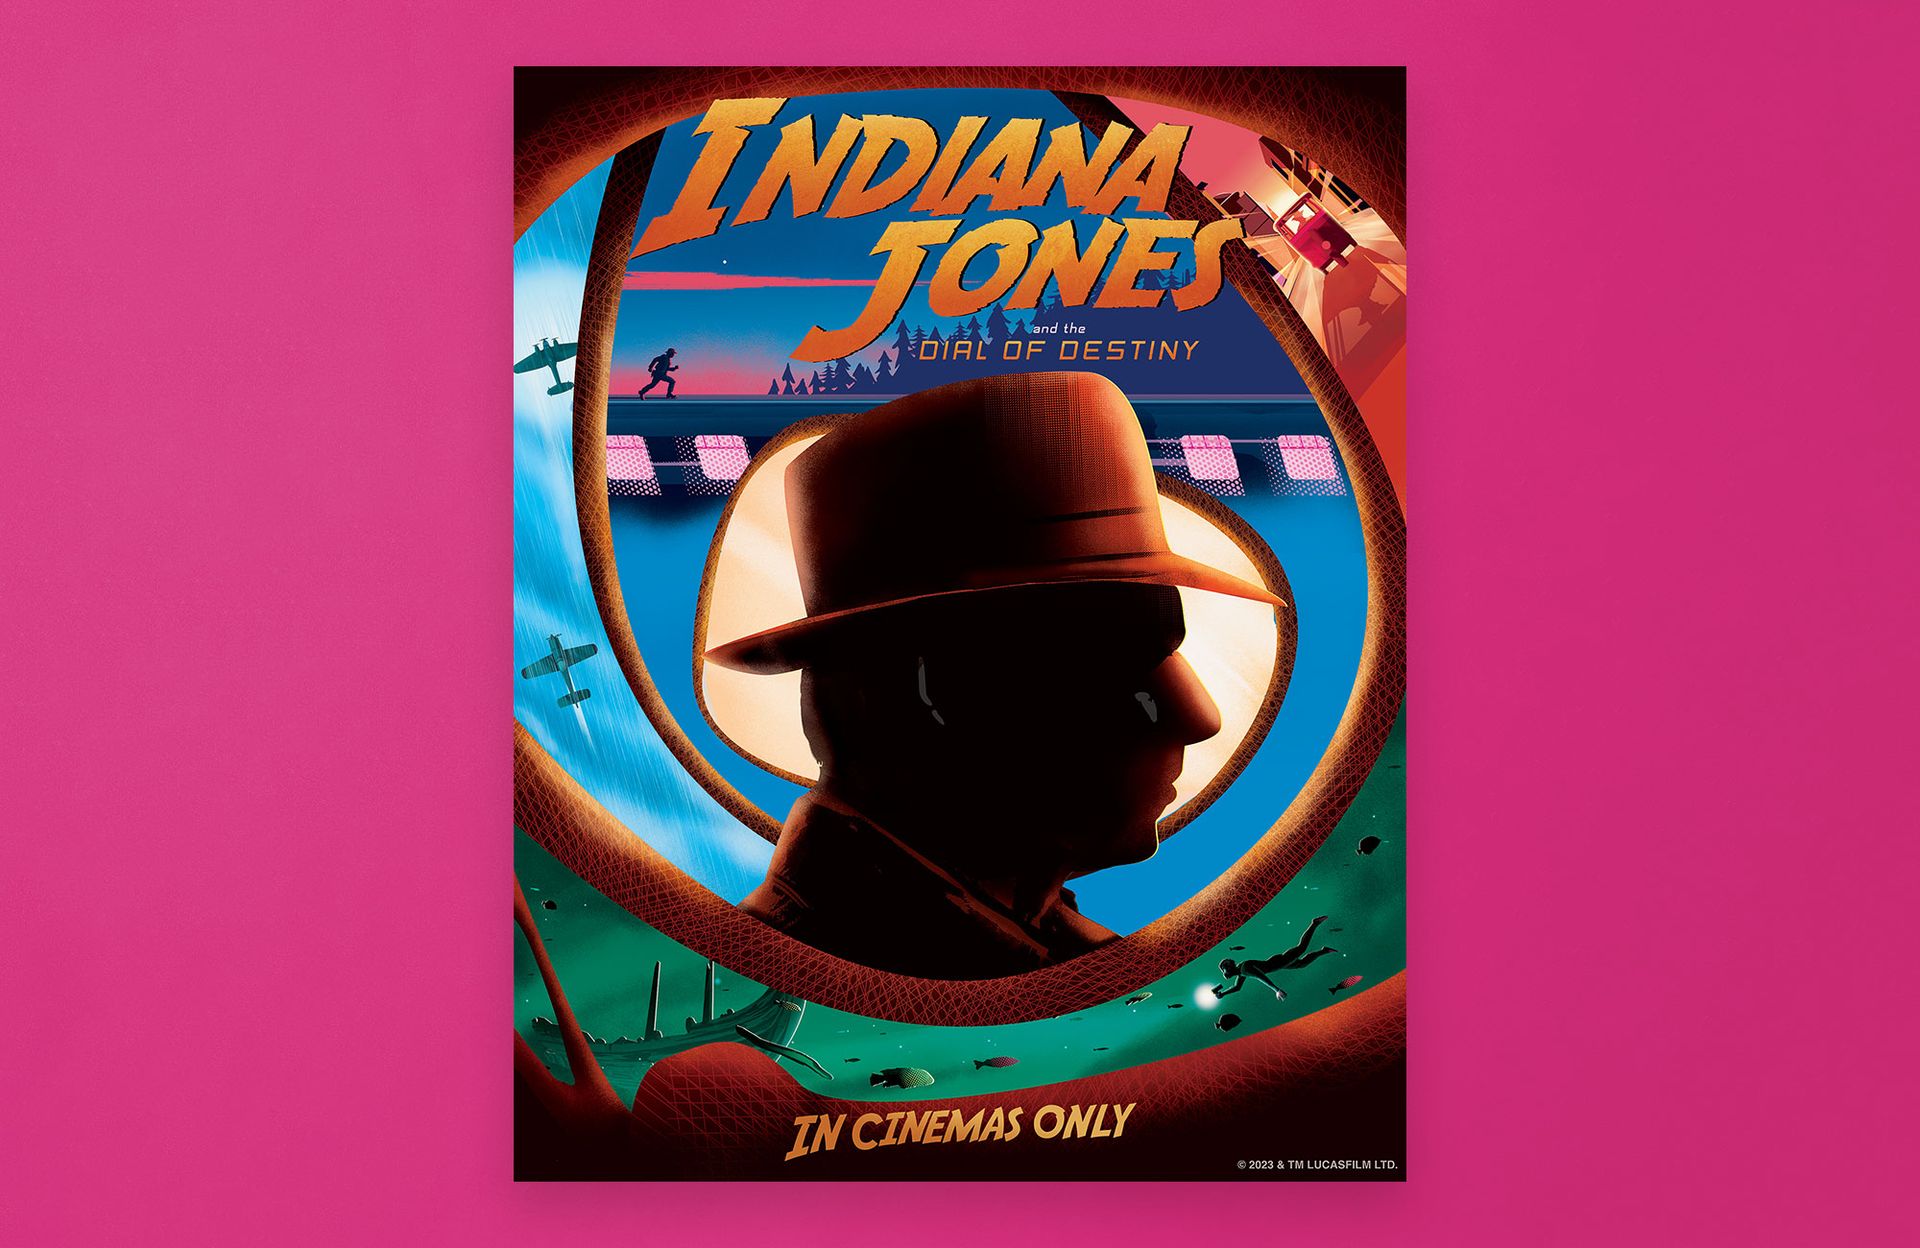 Indiana Jones - Dial of Destiny poster by Matt Saunders for Disney Studios UK